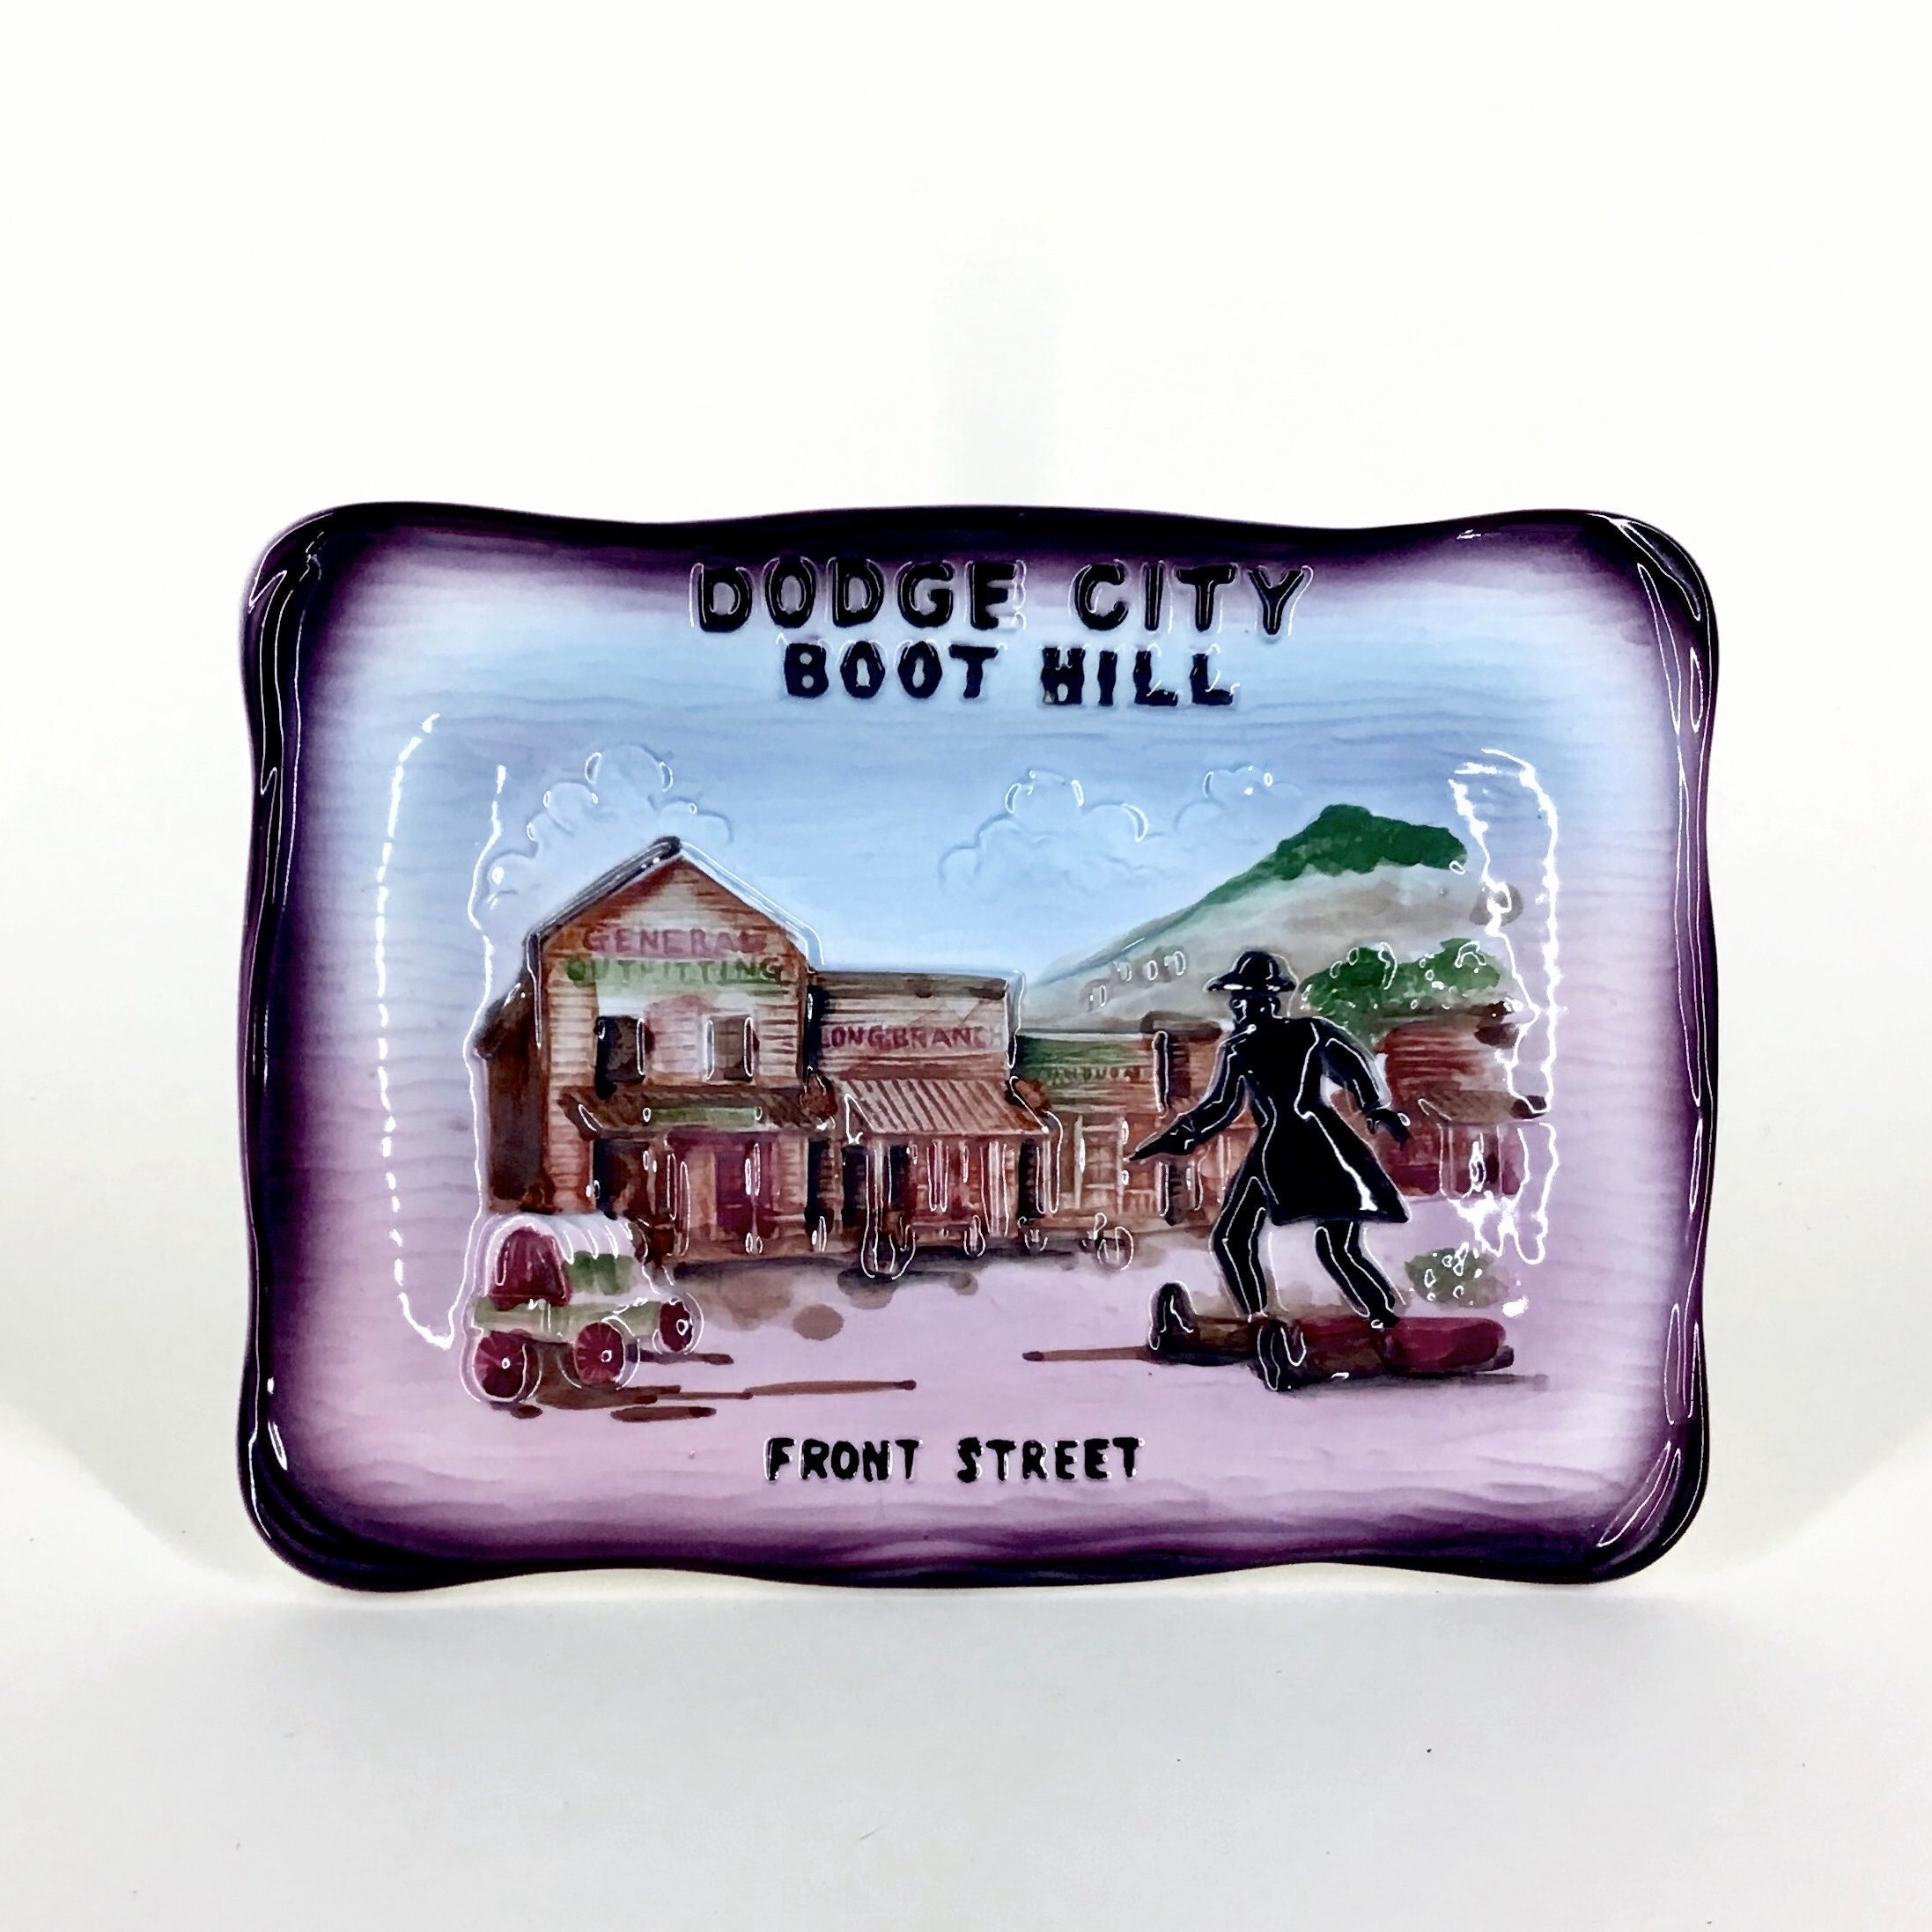 Vintage Front Street Boot Hill Dodge City Ceramic Souvenir Wall Plate  Shoot-em-up Jake, Long Branch Saloon, Kansas Kitsch Travel Souvenir 